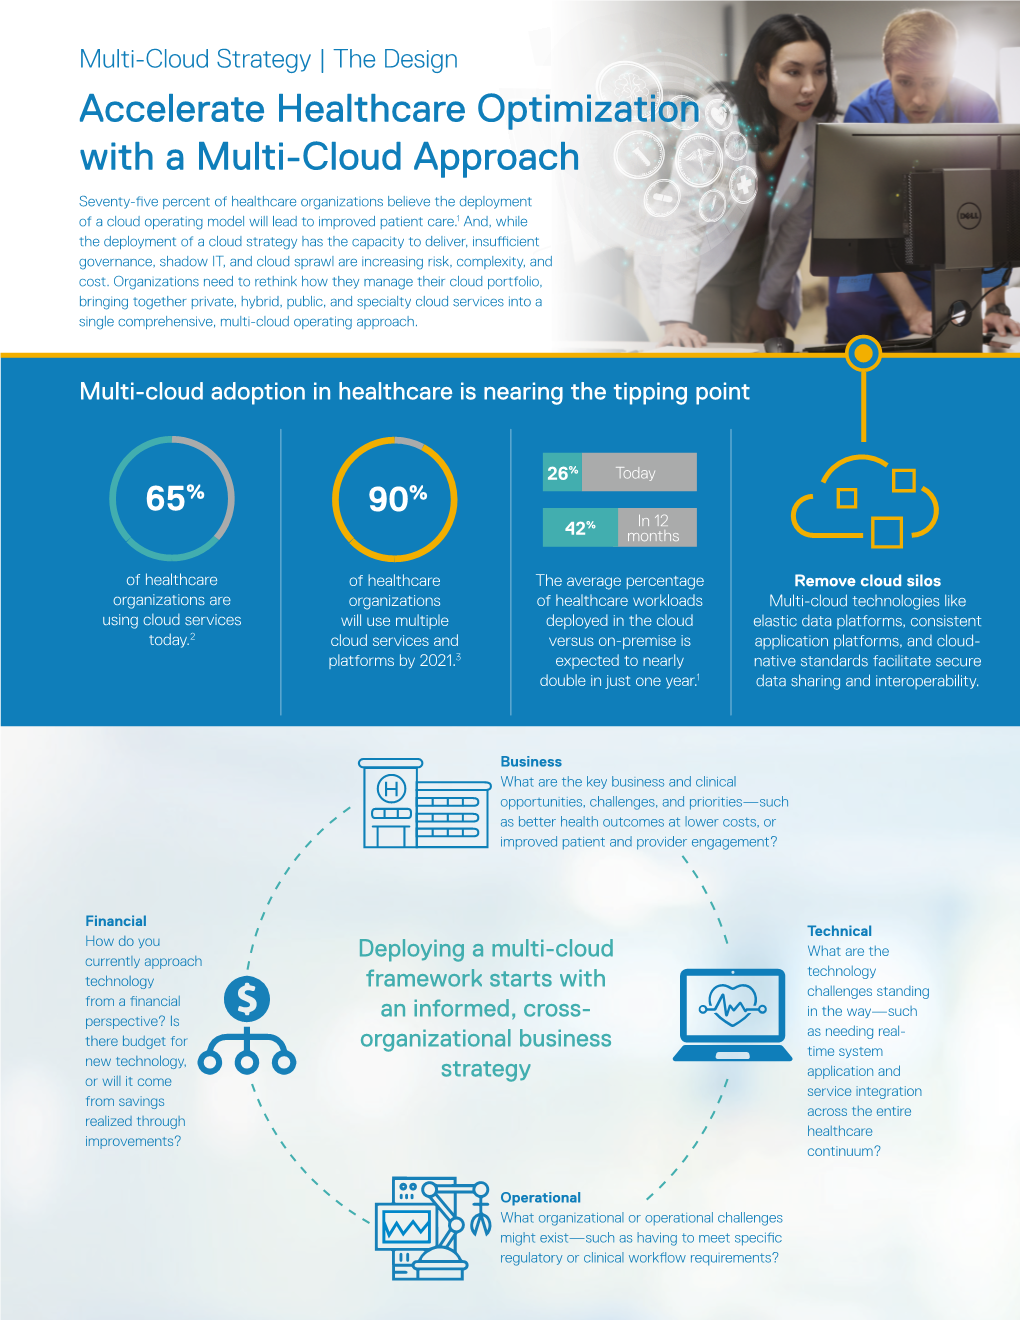 Accelerate Healthcare Optimization with a Multi-Cloud Approach